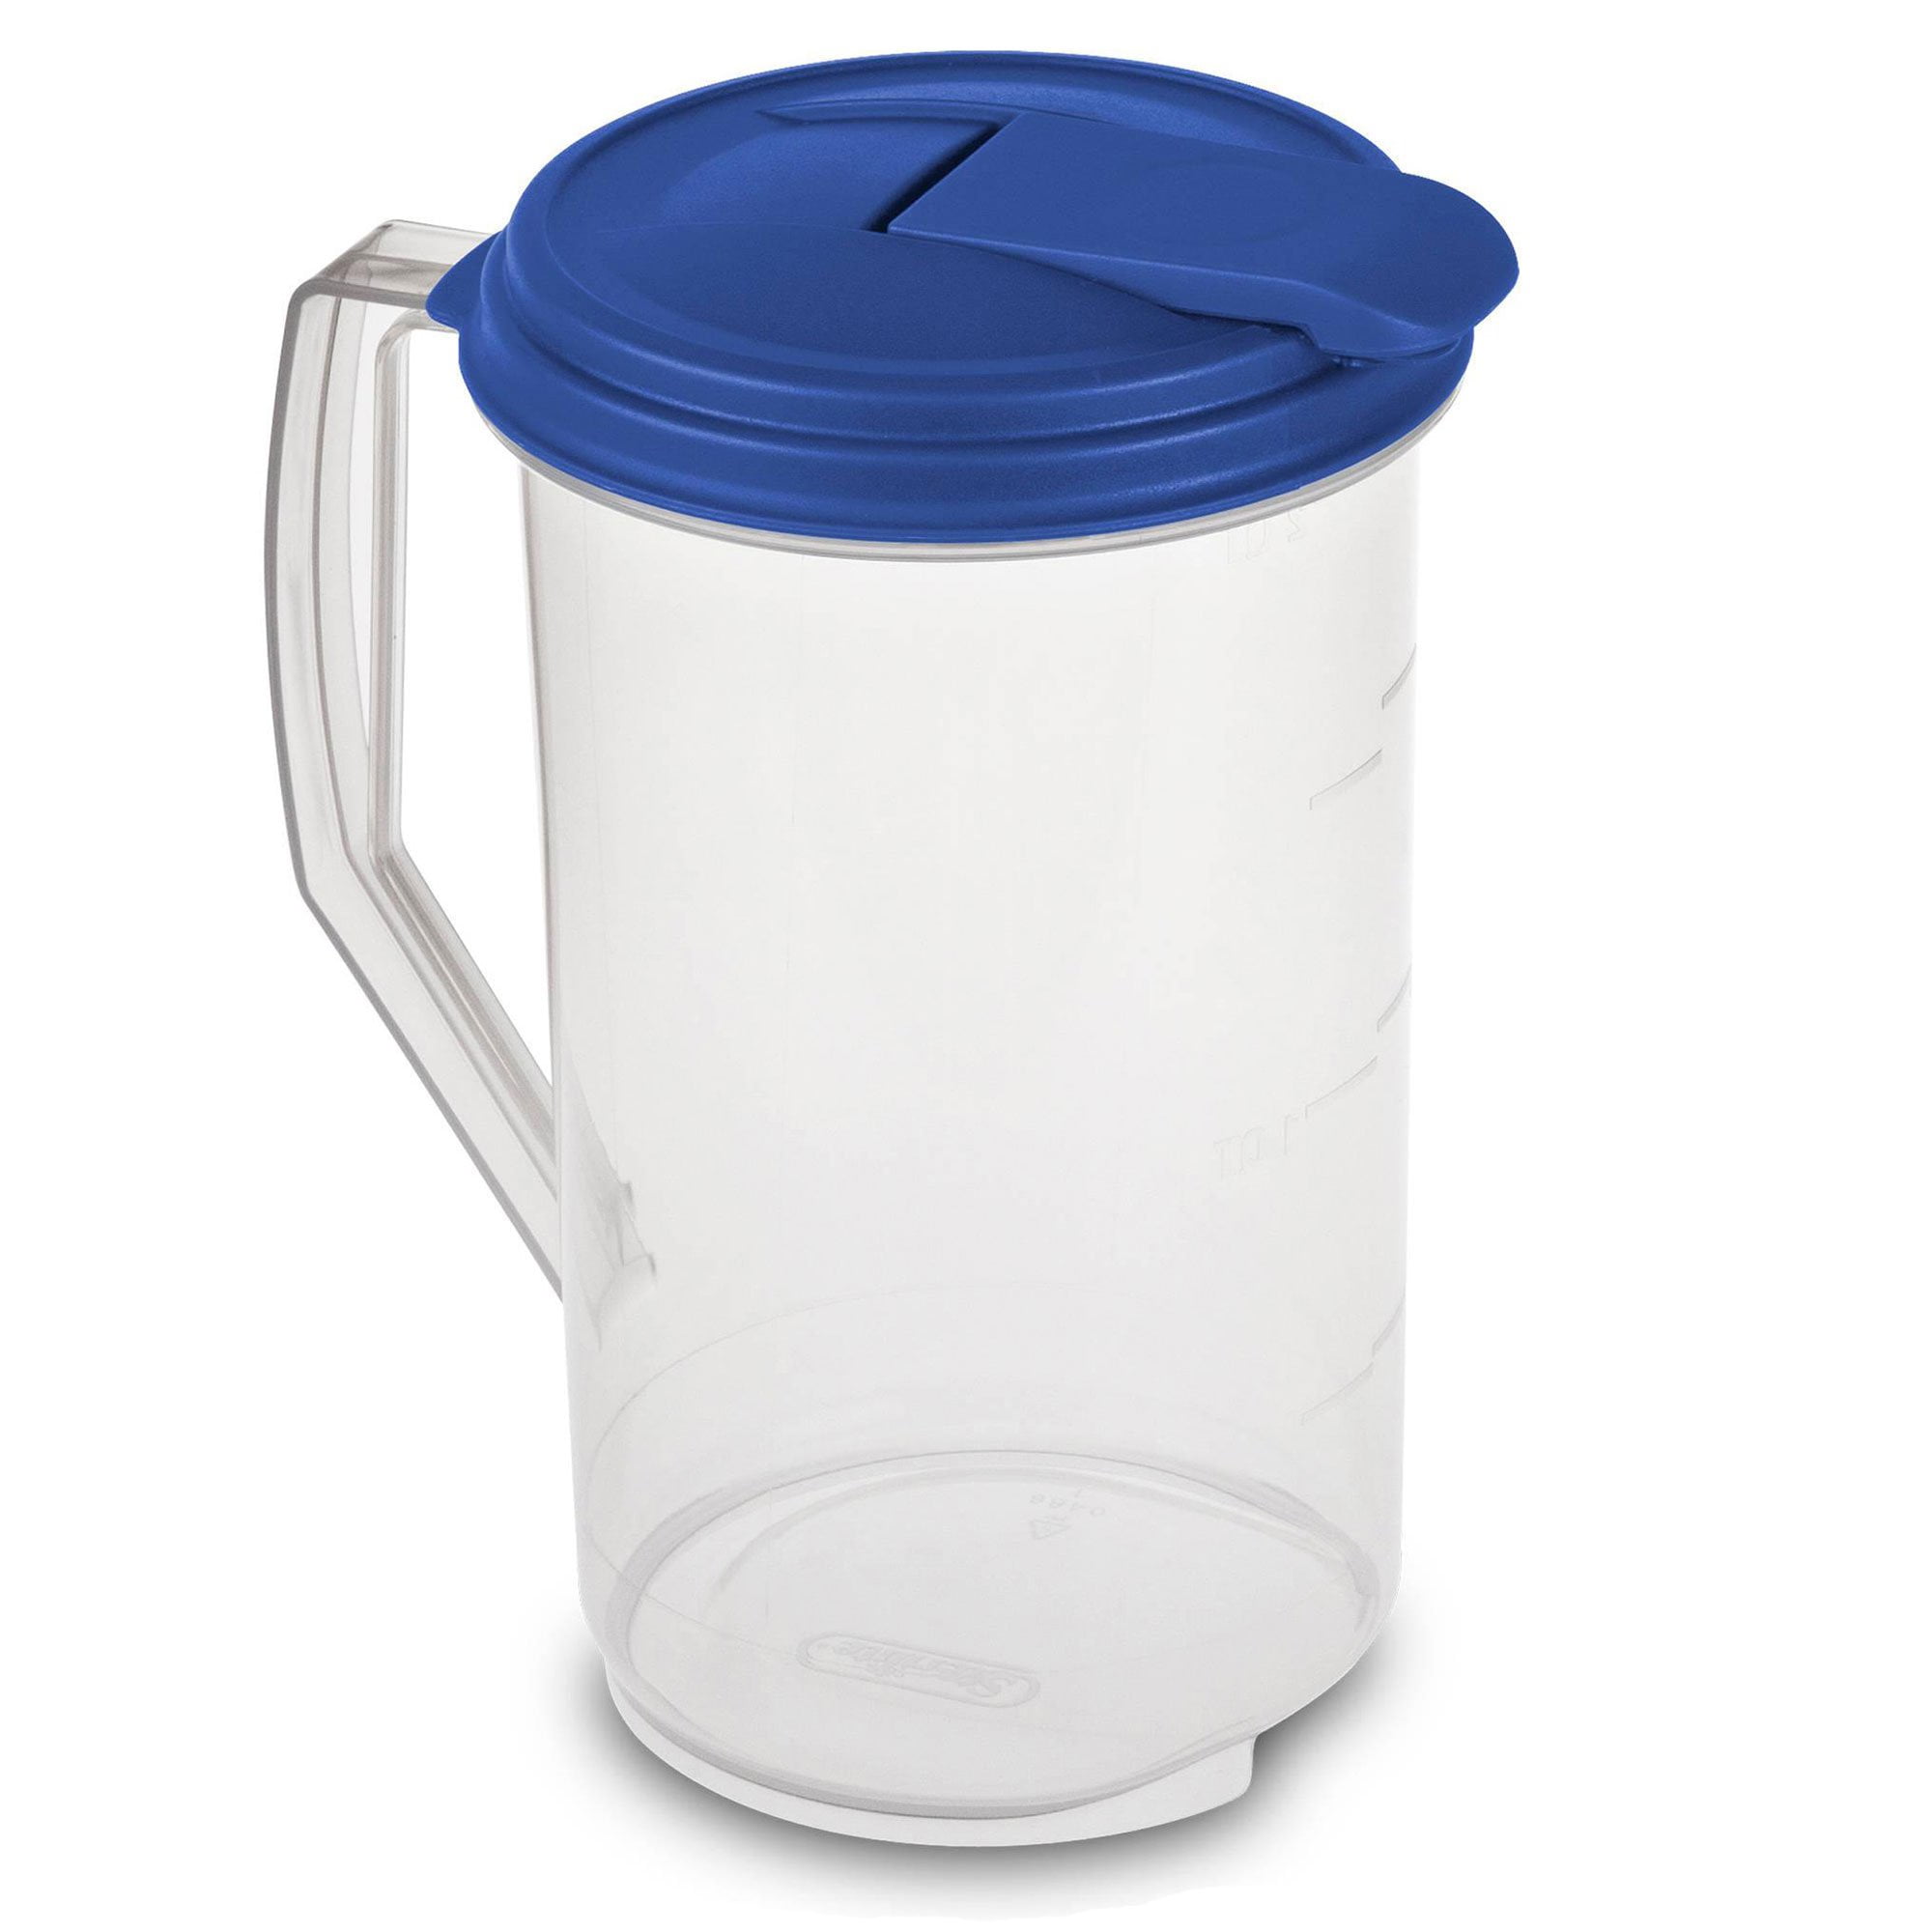 Sterilite 2 Qt Clear Plastic Drink Pitcher with Leak Proof Lid, Blue (18